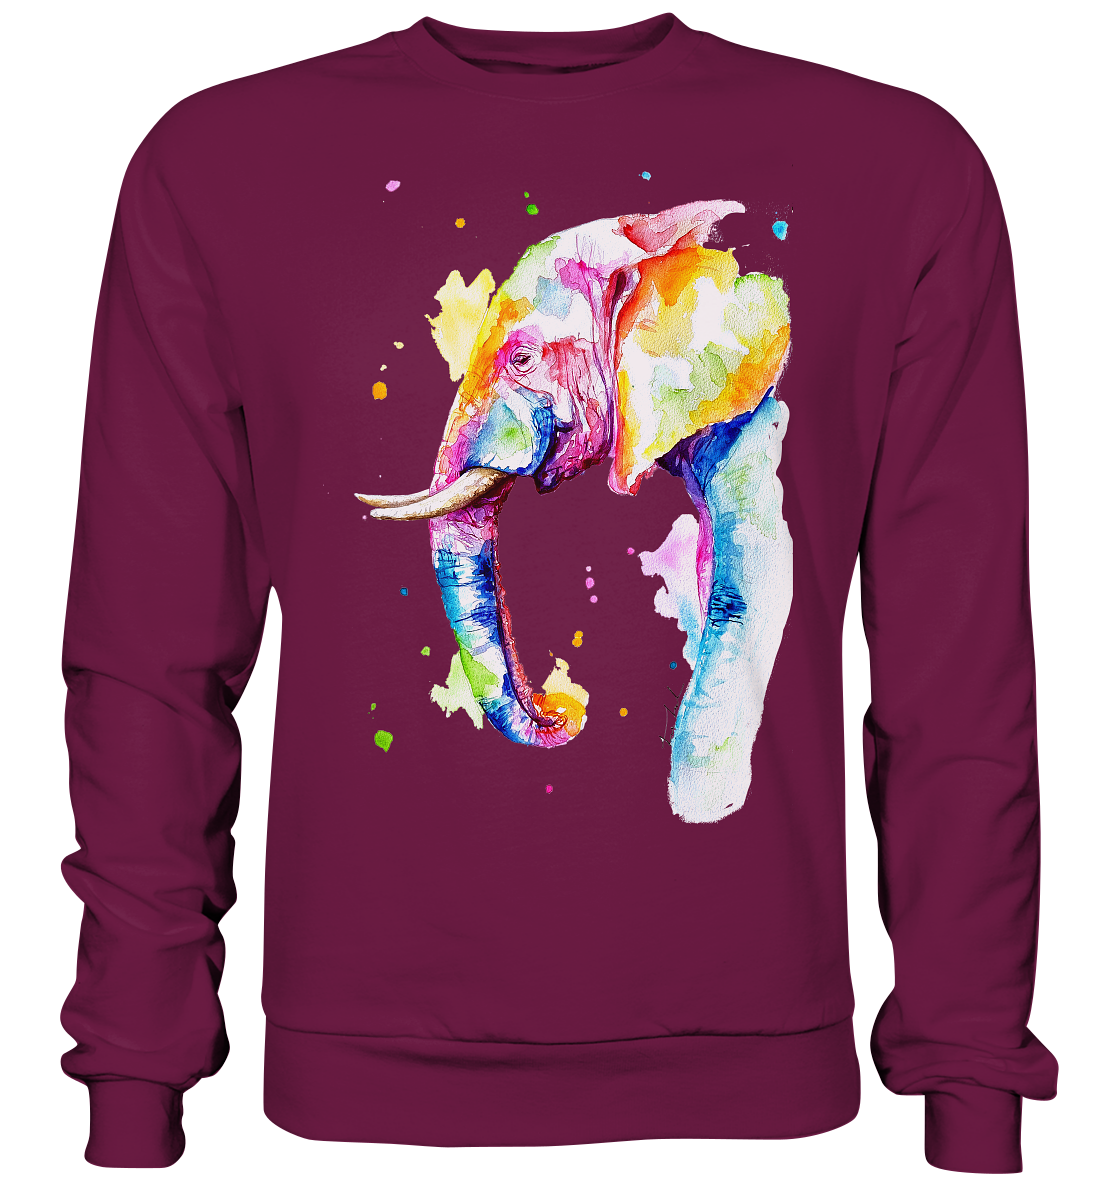 Bunter Elefant - Premium Sweatshirt